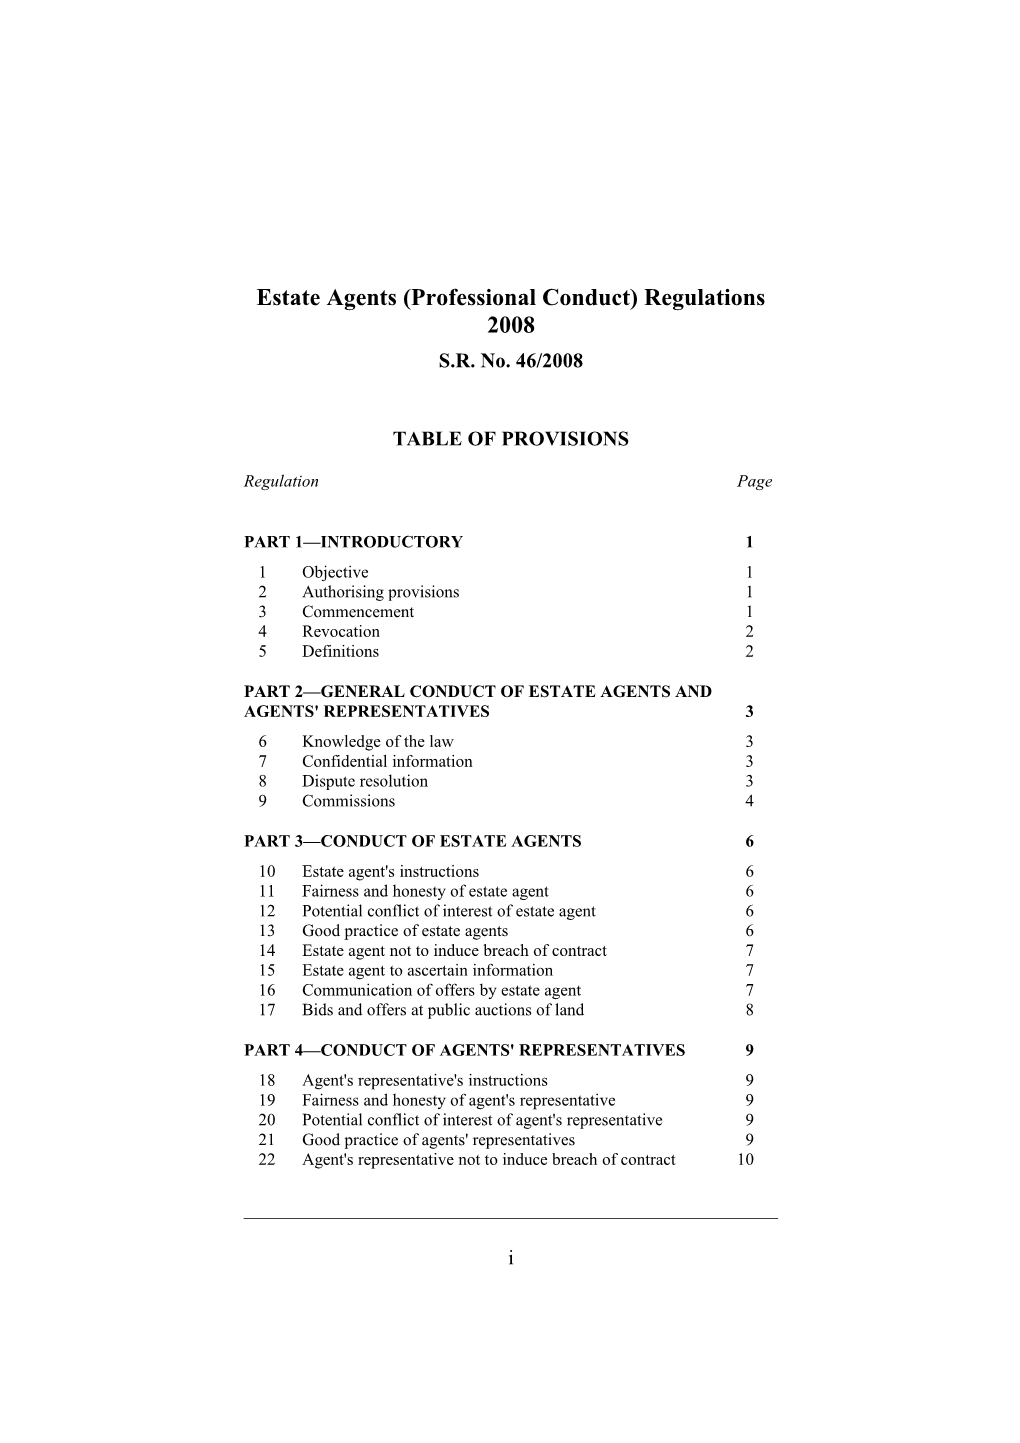 Estate Agents (Professional Conduct) Regulations 2008